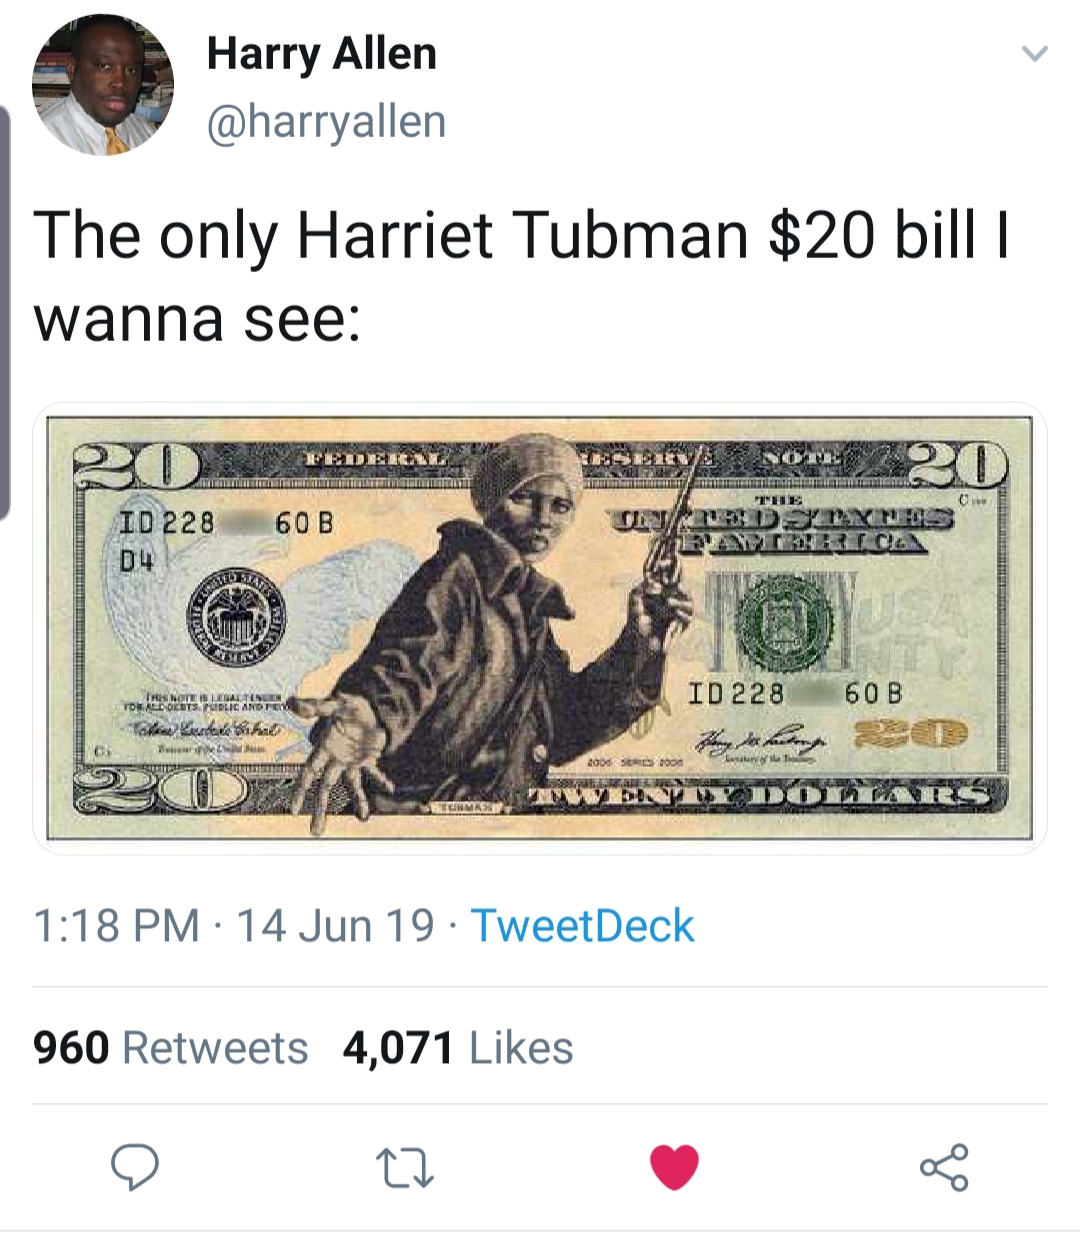 harriet tubman 20 dollar bill meme - Harry Allen The only Harriet Tubman $20 billi wanna see 20 Id 228 D4 60B Aldes Bilo Id 228 60B Does 14 Jun 19. TweetDeck 960 4,071 27